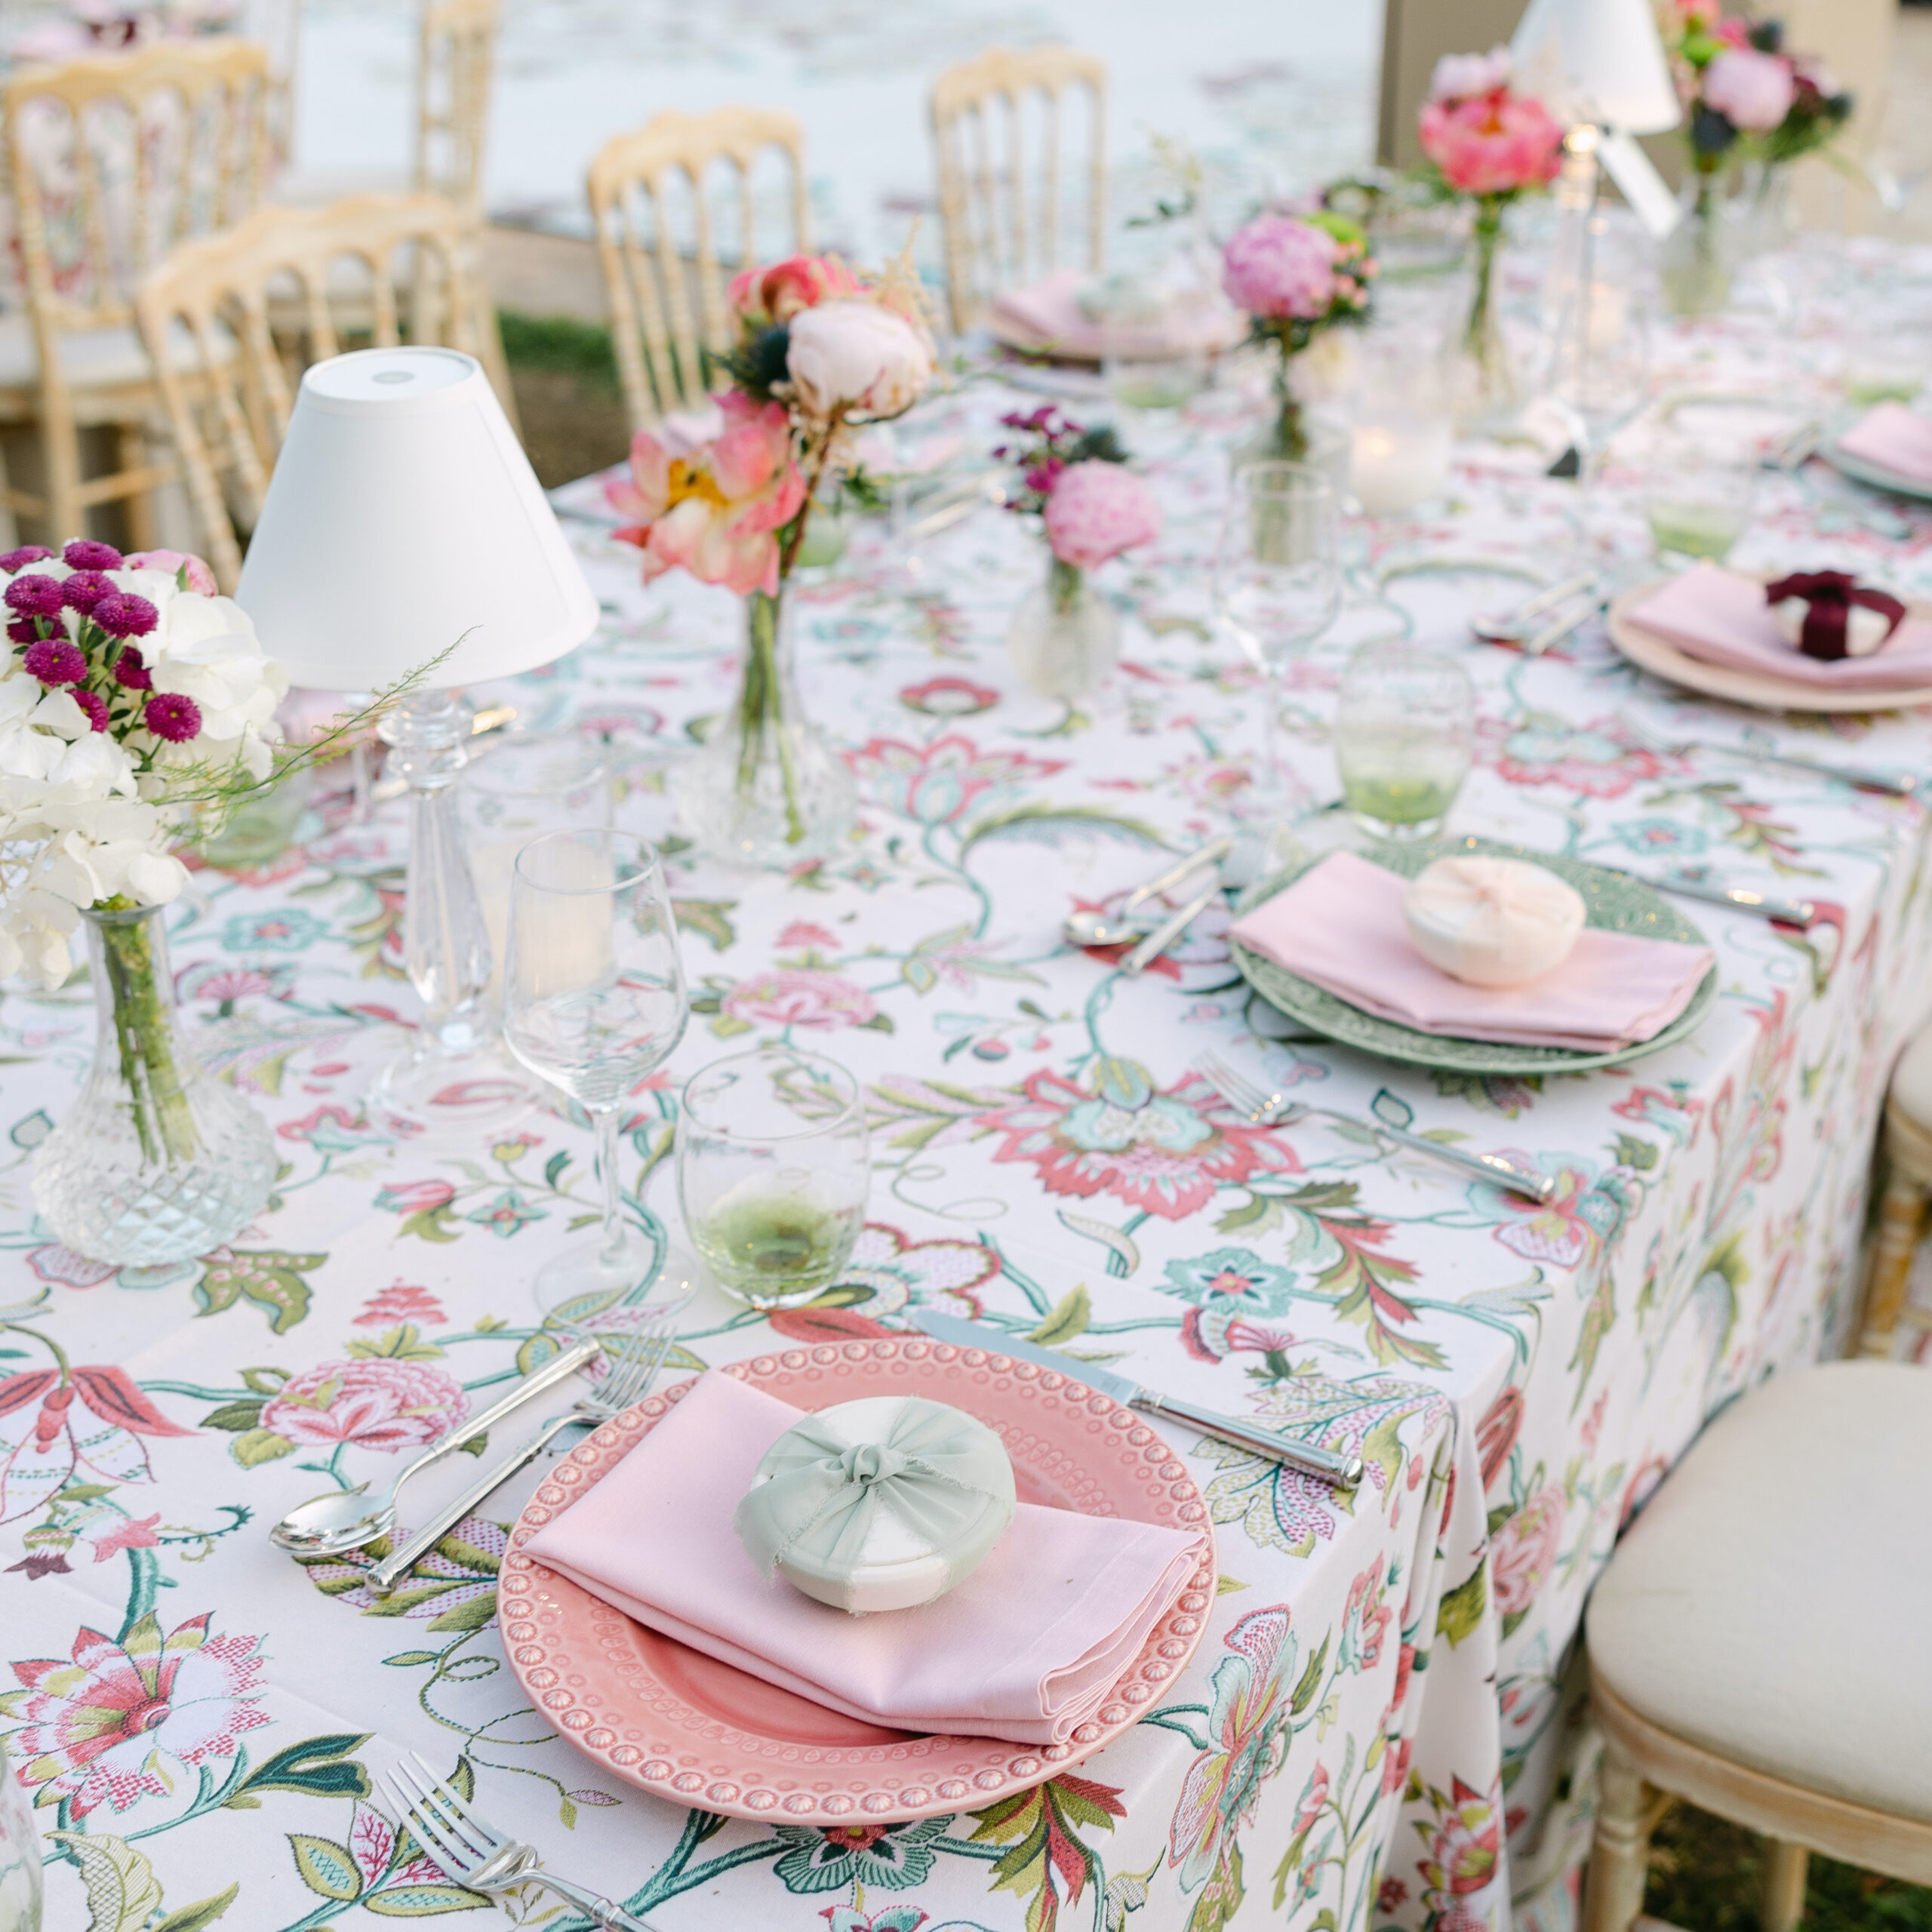 floral-accents-wedding-reception-table-setup-favors-main-photo